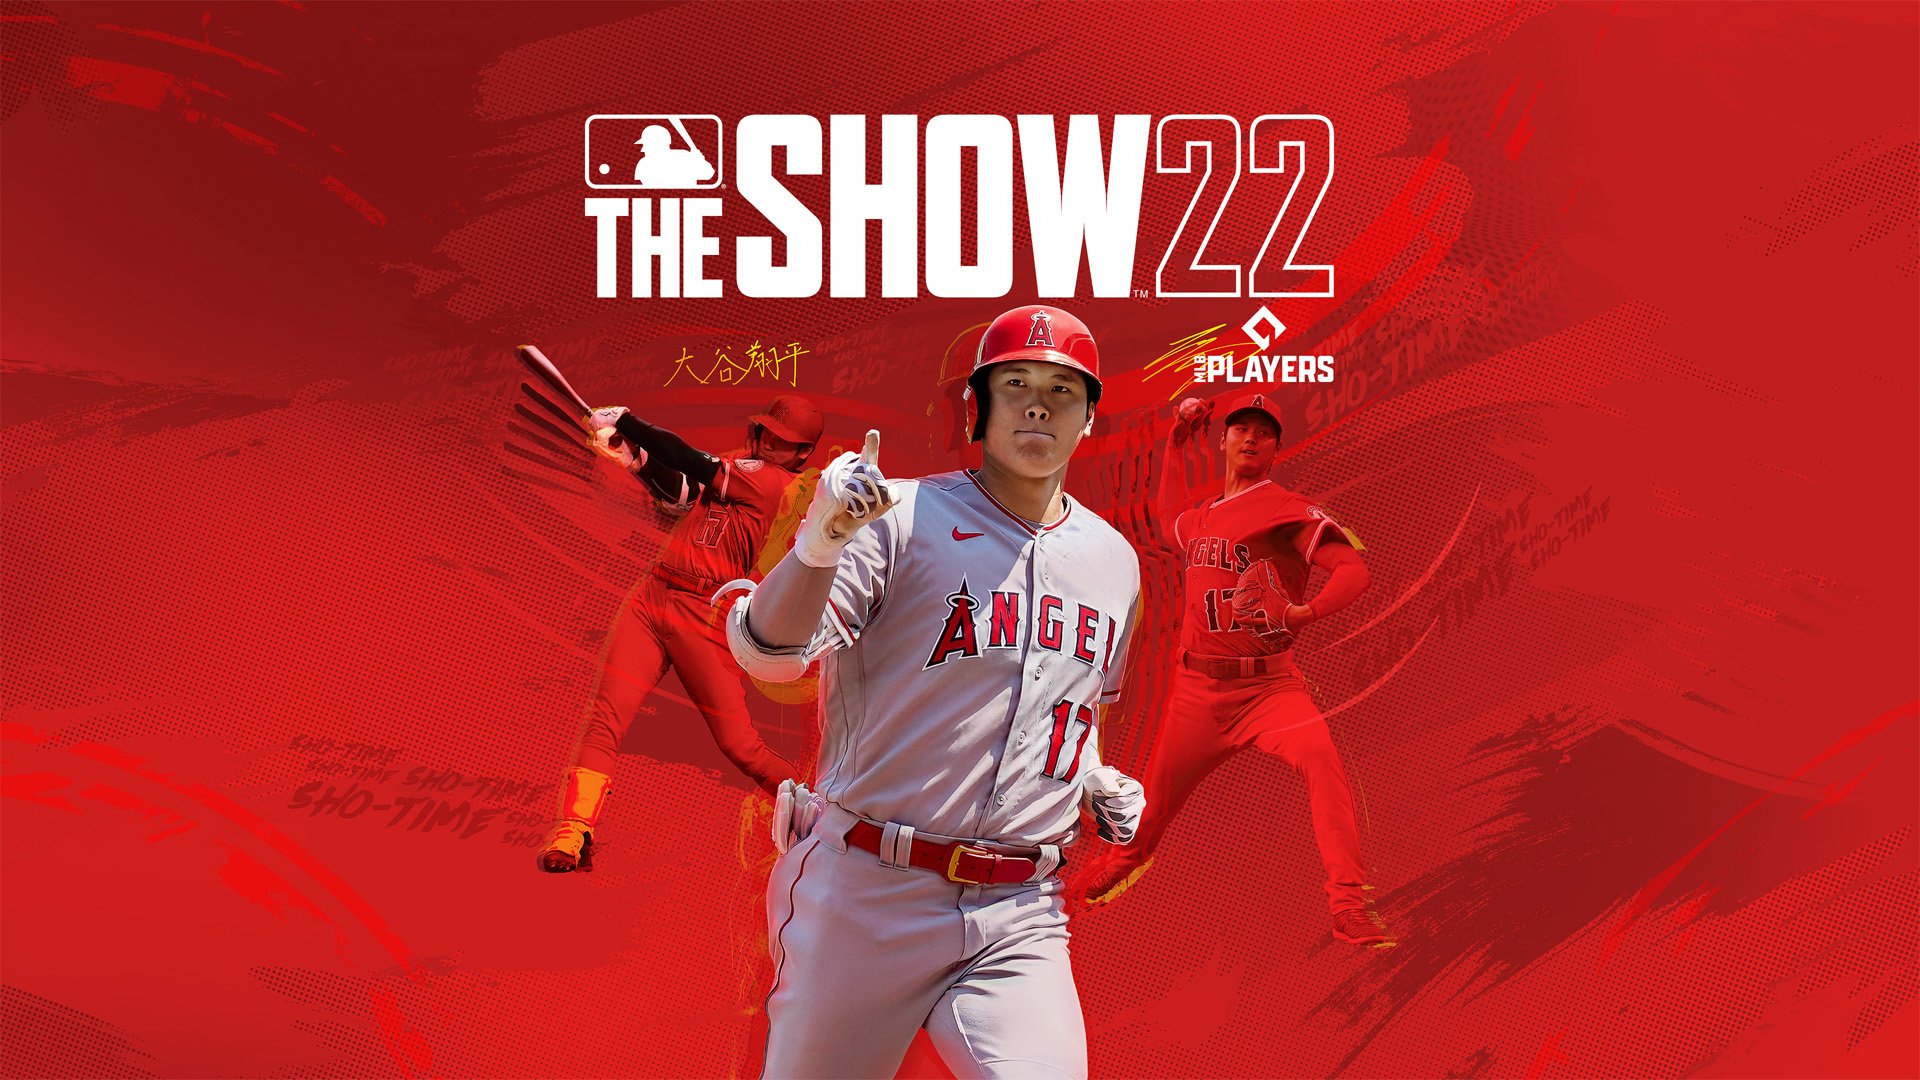 Najavljen MLB The Show 22